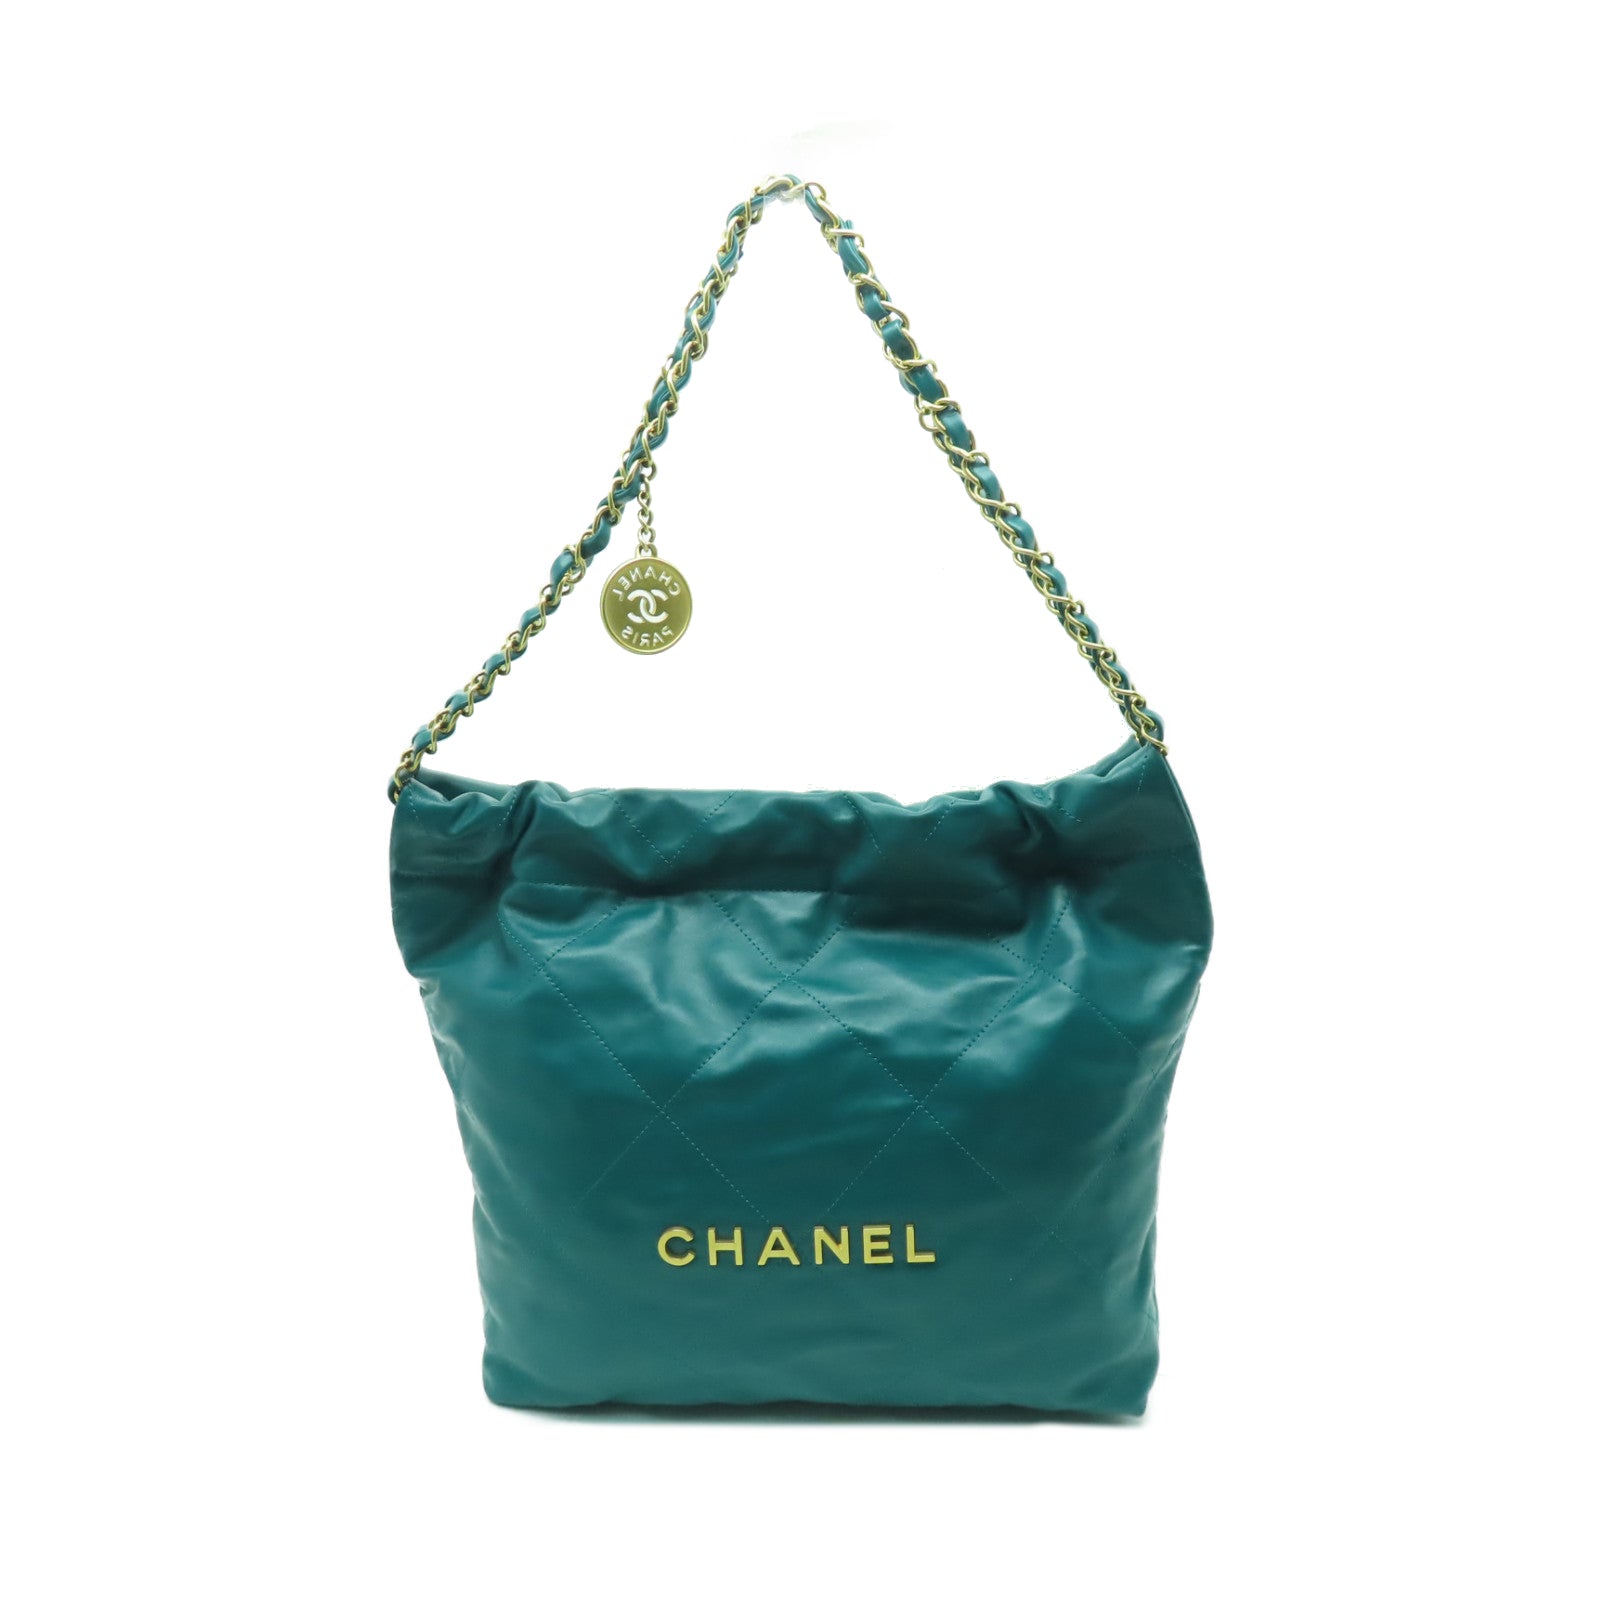 CHANEL 菱格牛皮皮革Chanel 22金扣鏈帶肩背袋綠色